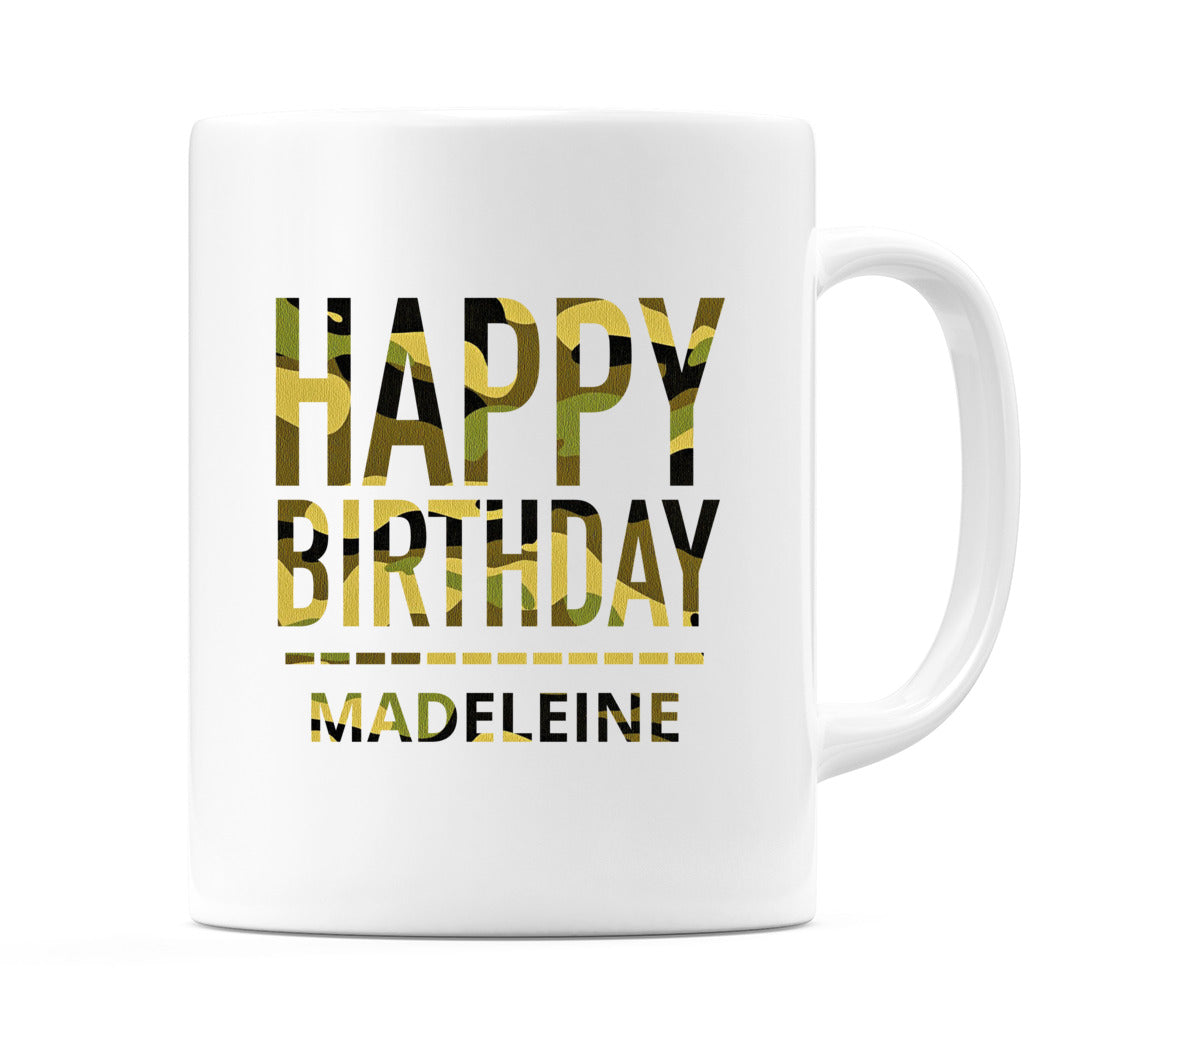 Happy Birthday Madeleine (Camo) Mug Cup by WeDoMugs